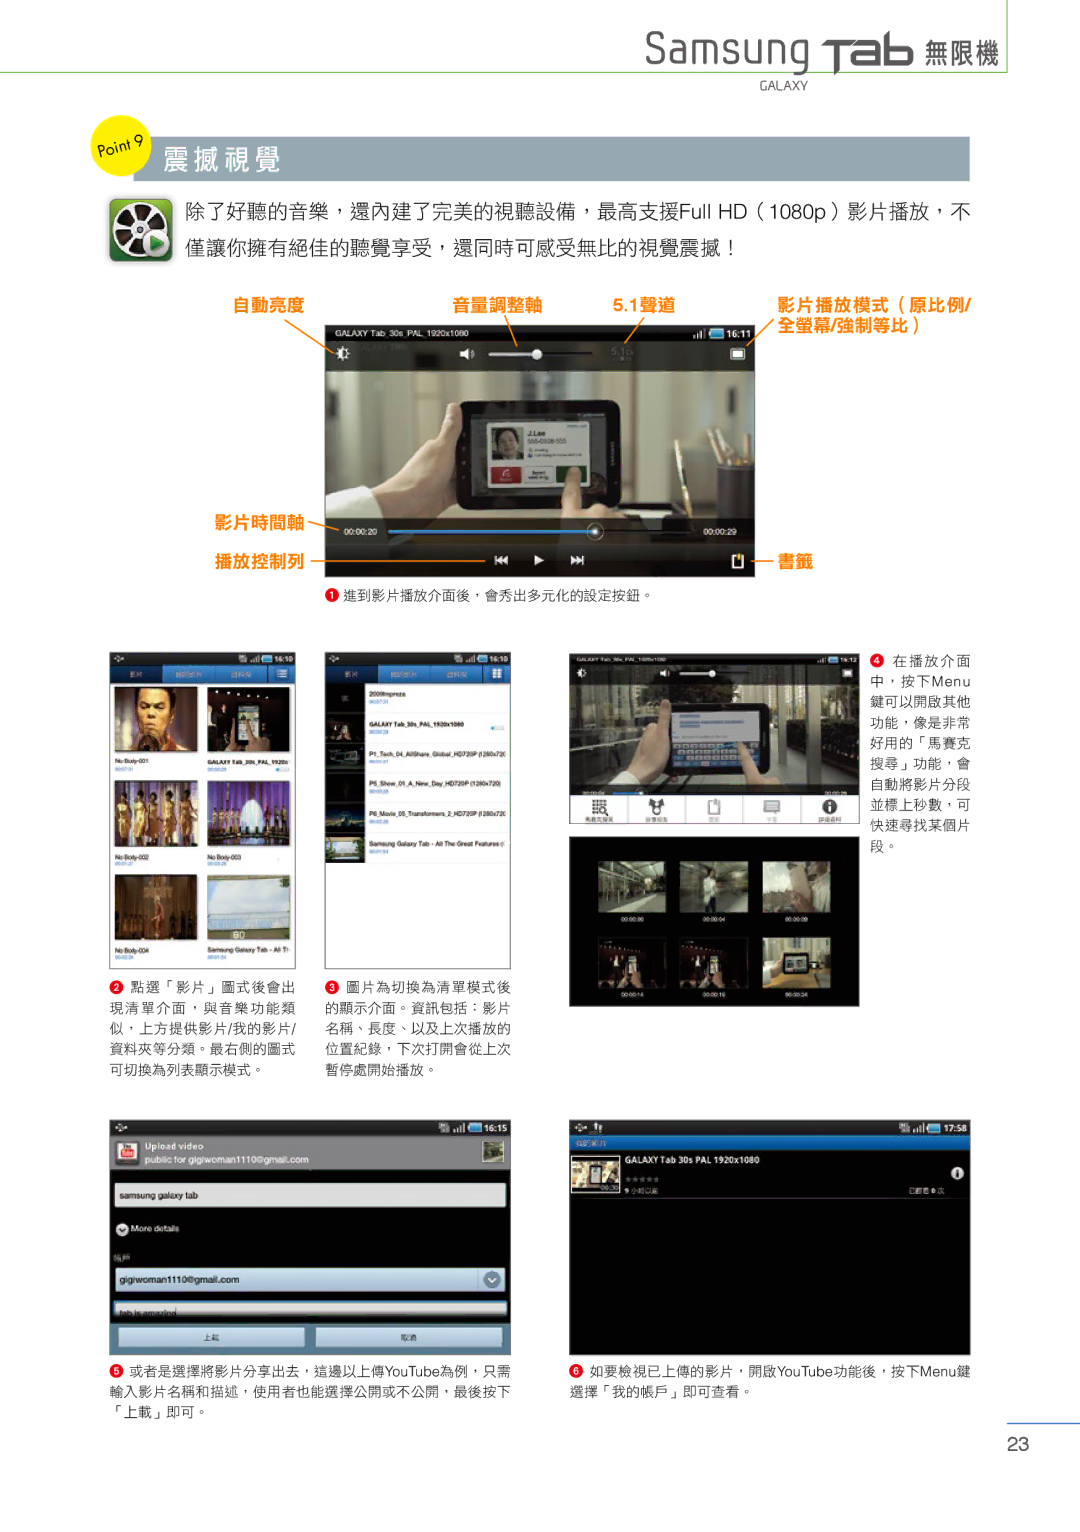 Samsung Tablet manual 震撼視覺, 自動亮度 音量調整軸 影片播放模式（原比例 全螢幕 /強制等比） 影片時間軸 播放控制列 